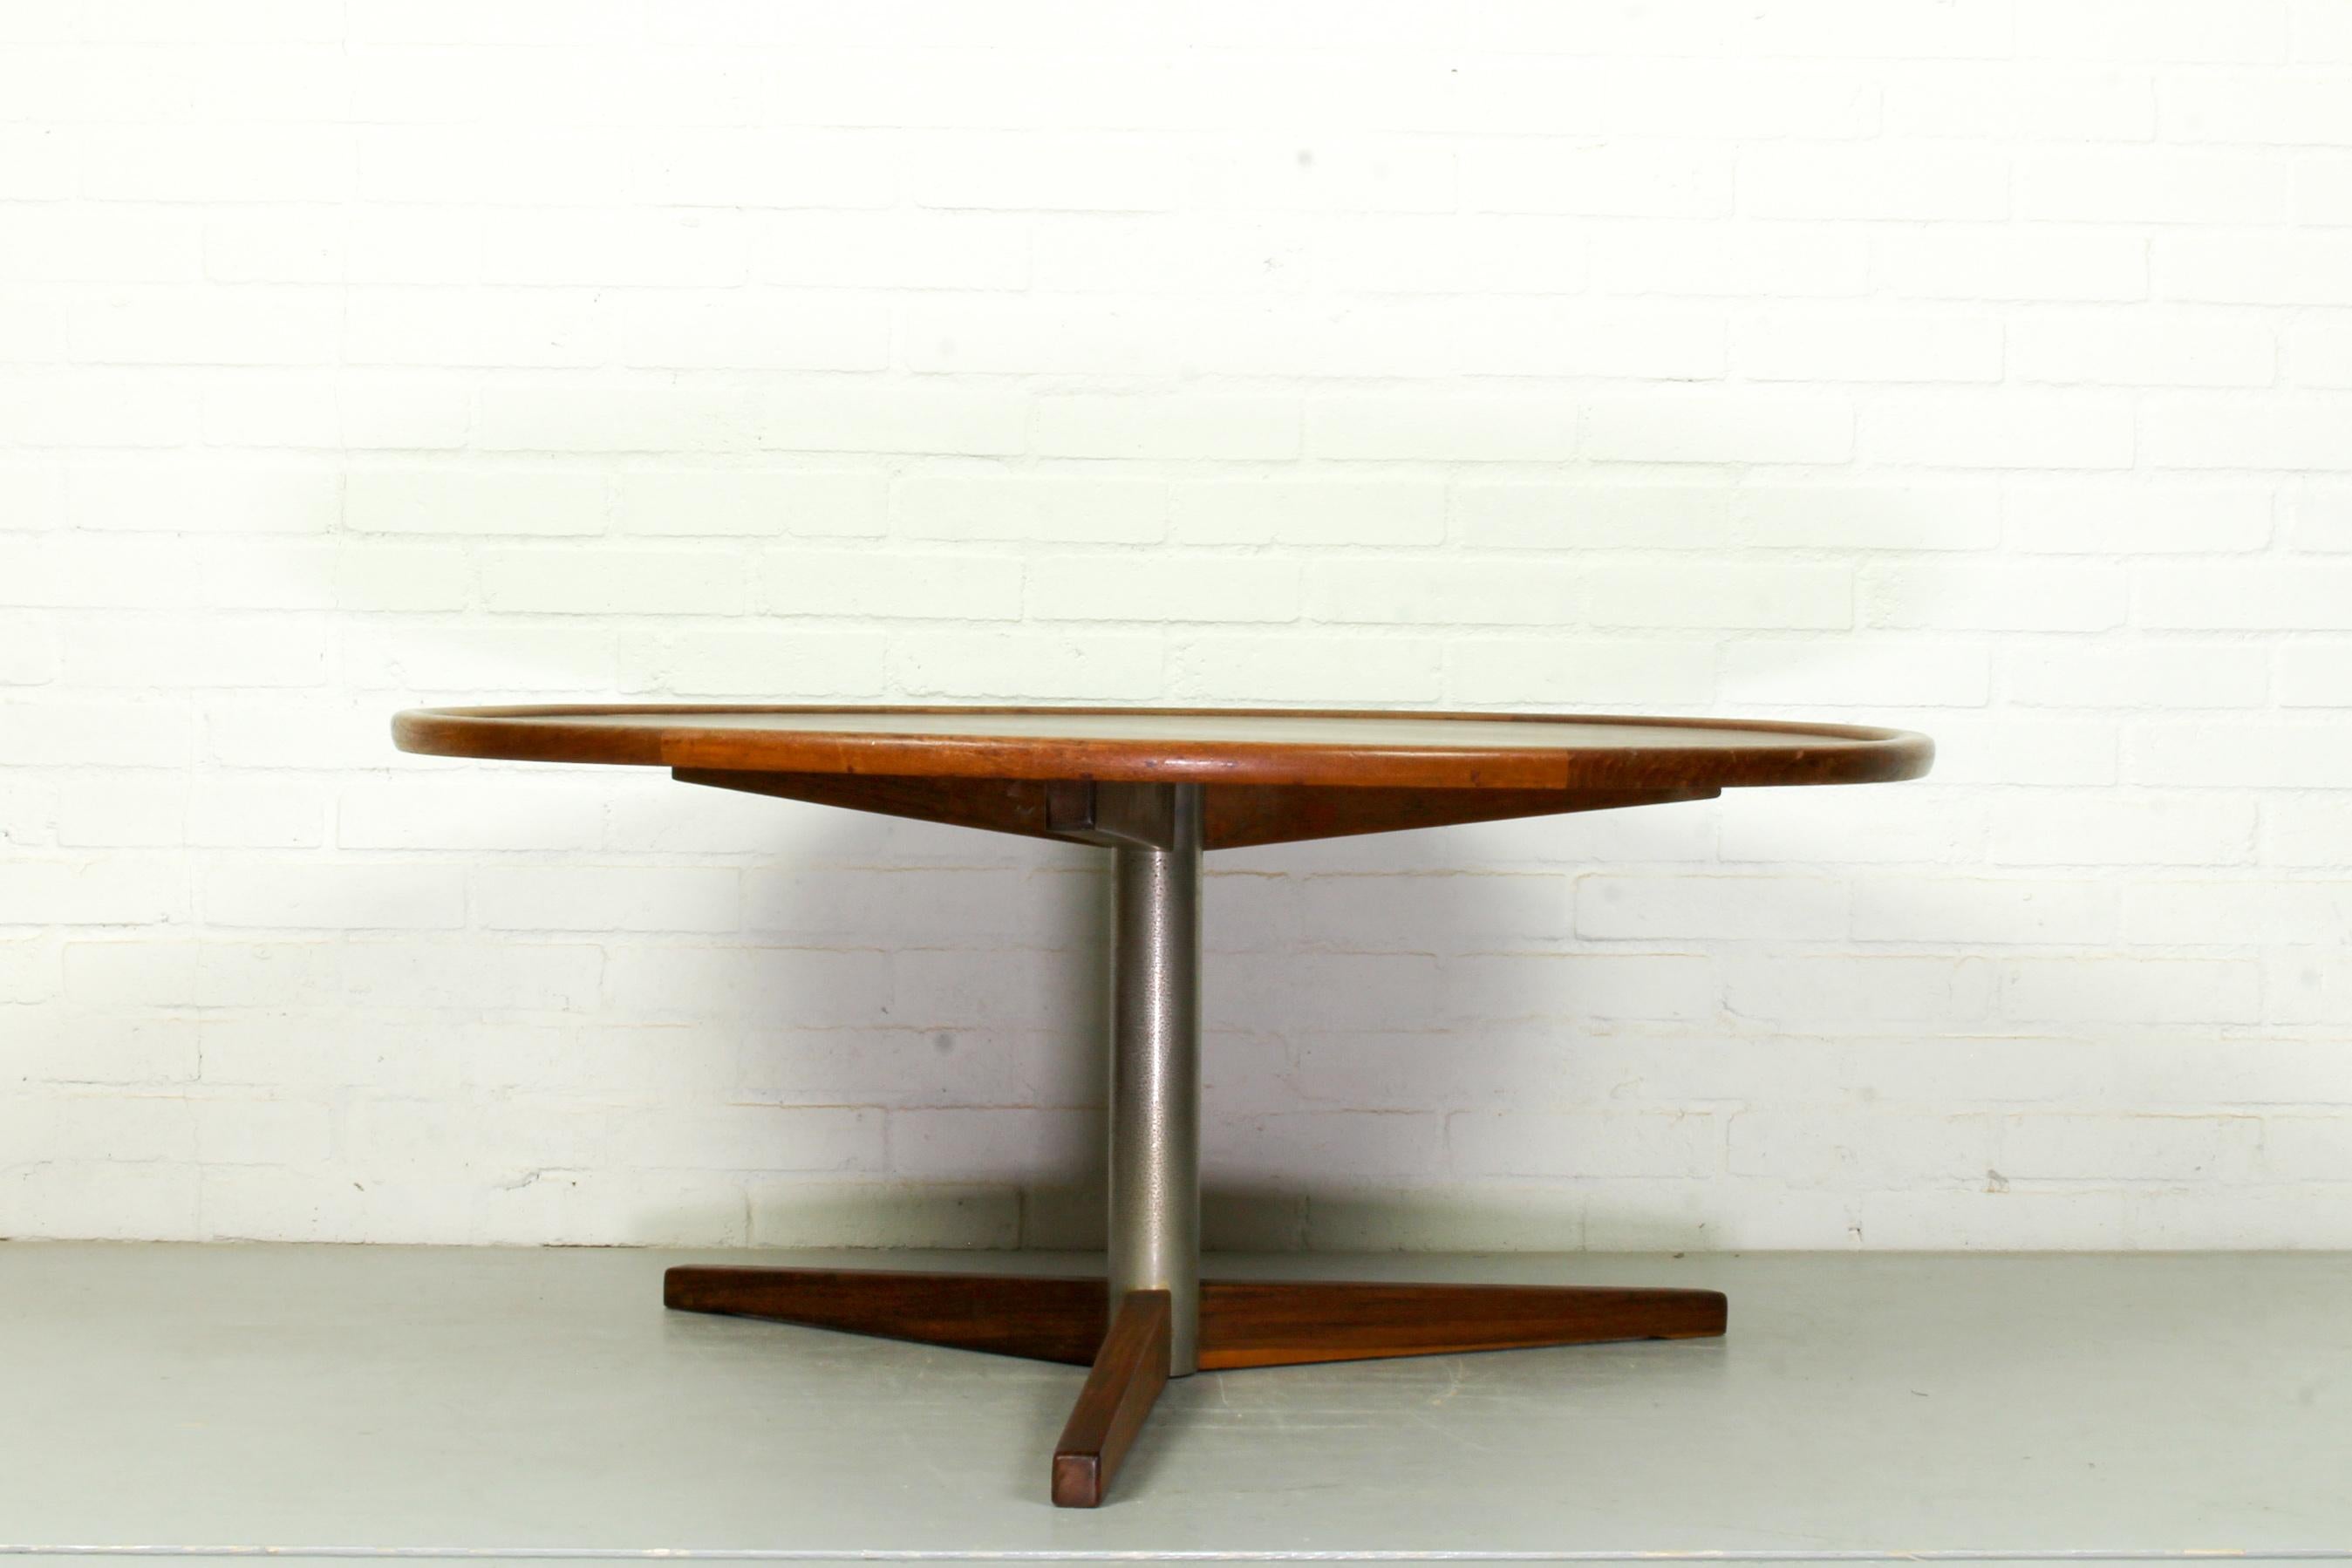 Fifties teak coffee table by Martin Visser for Spectrum nice elegant coffee/side table. Designer: Martin Visser Manufacturer: Spectrum Holland.